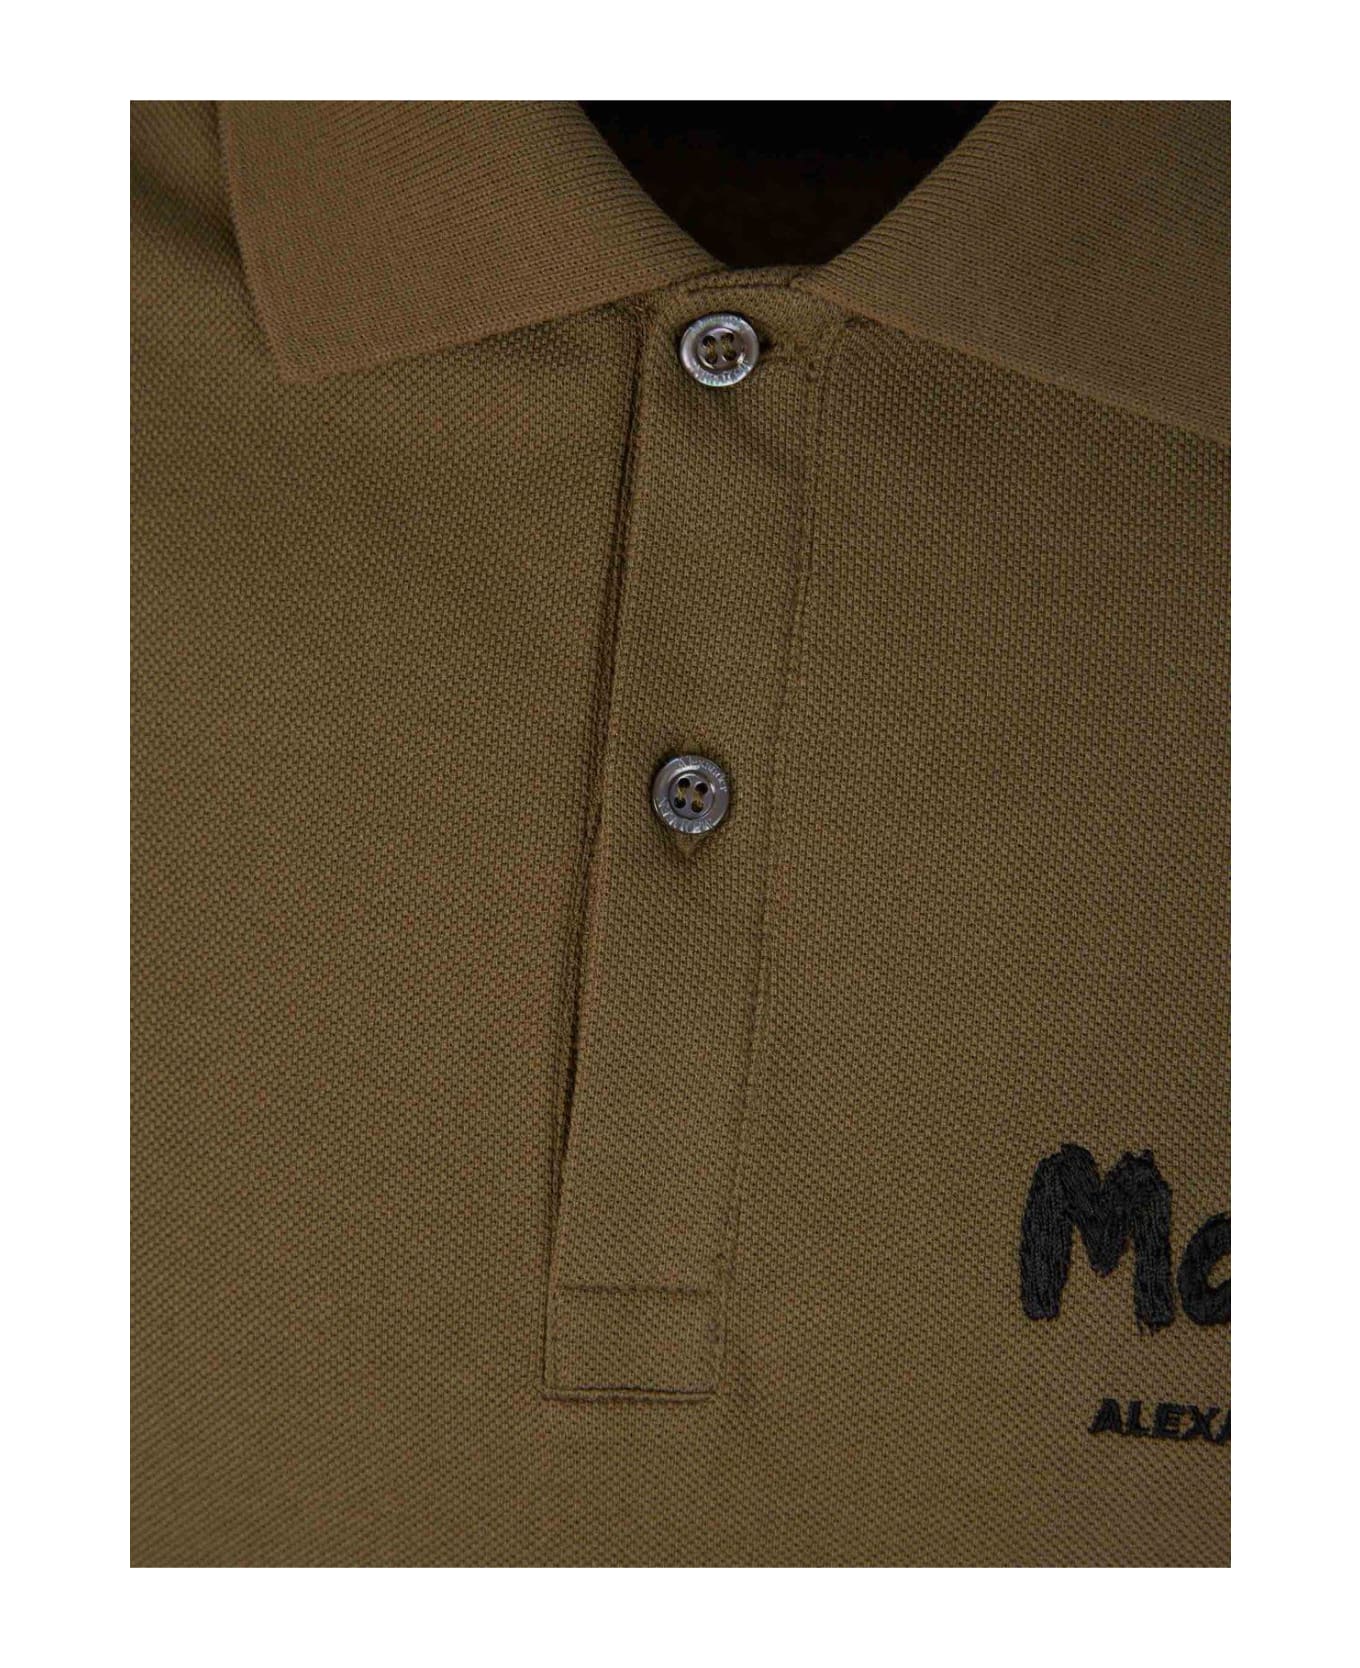 Alexander McQueen Graffiti Printed Polo Shirt - KAKI シャツ